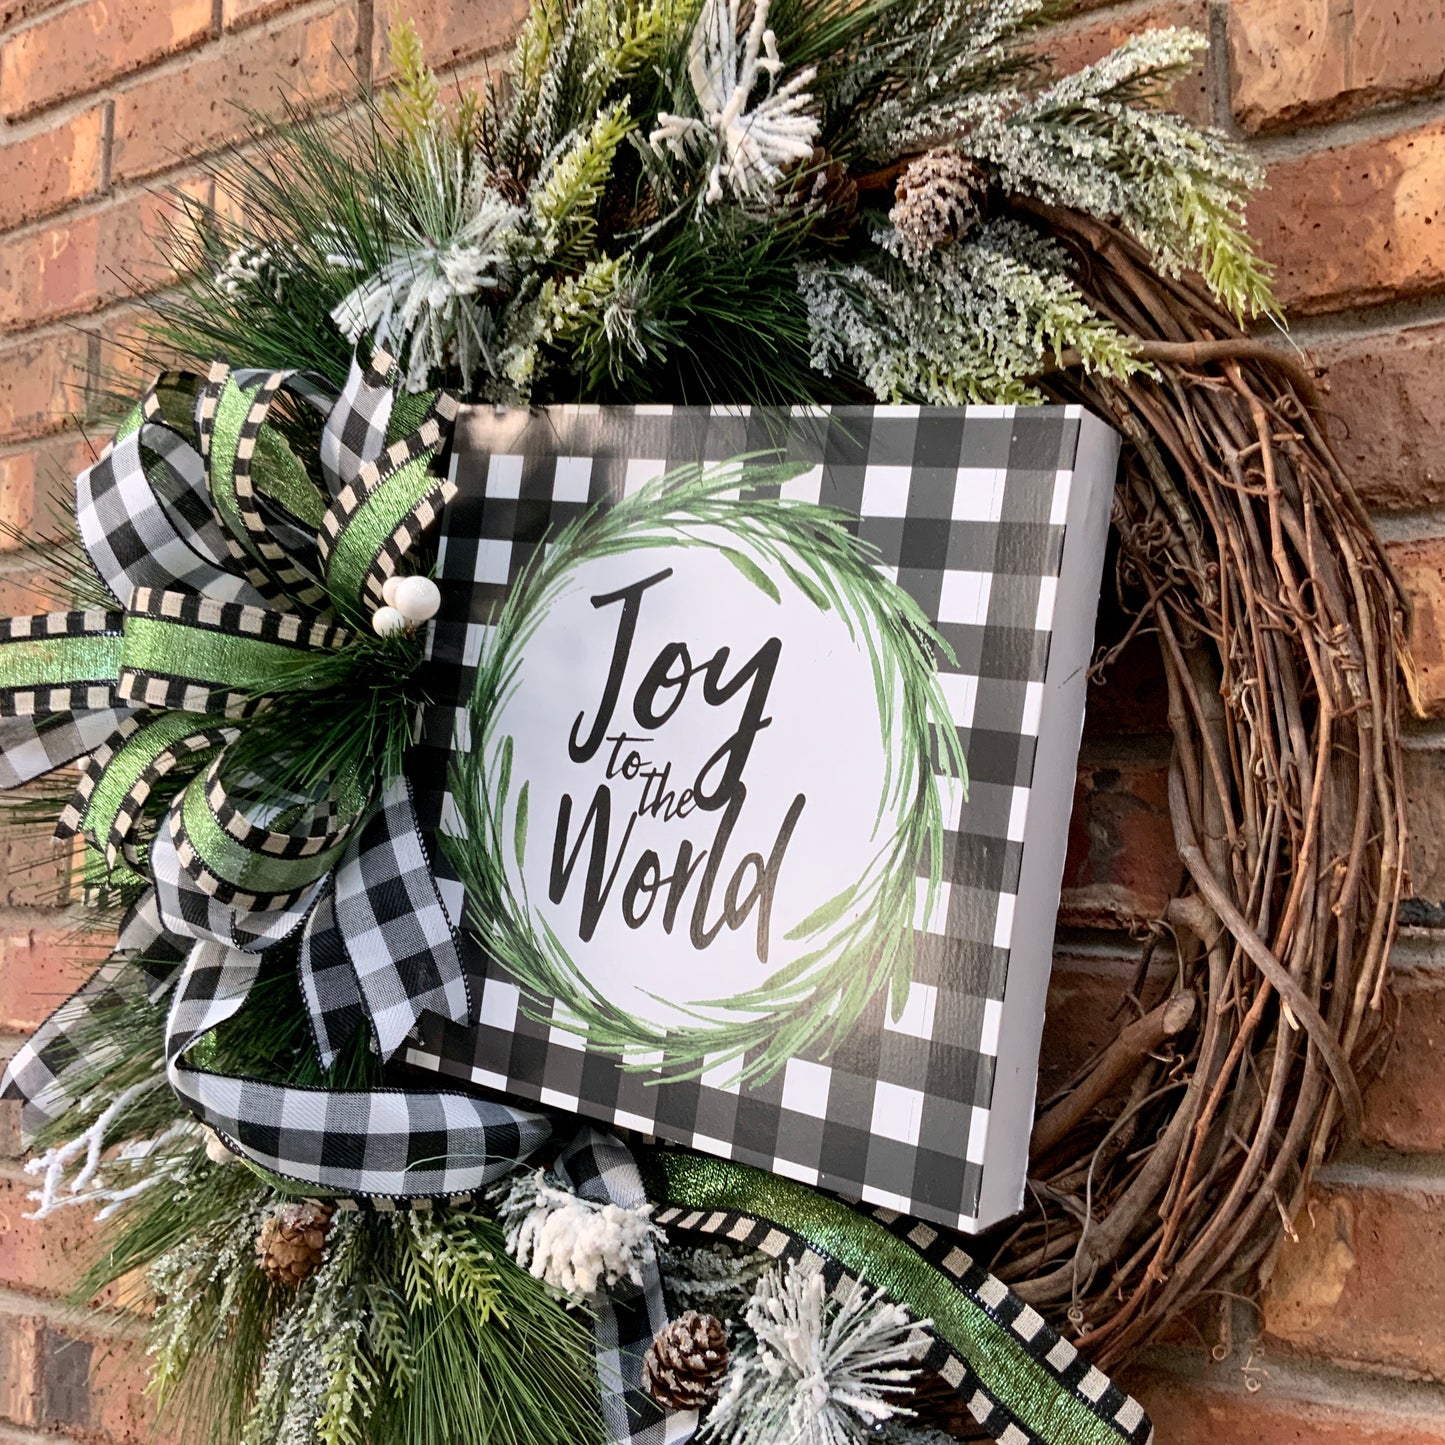 Joy To The World Wreath, Christmas Grapevine Wreath, Christmas Green Wreath, Christmas Greenery Wreath, Christmas Buffalo Check Wreath